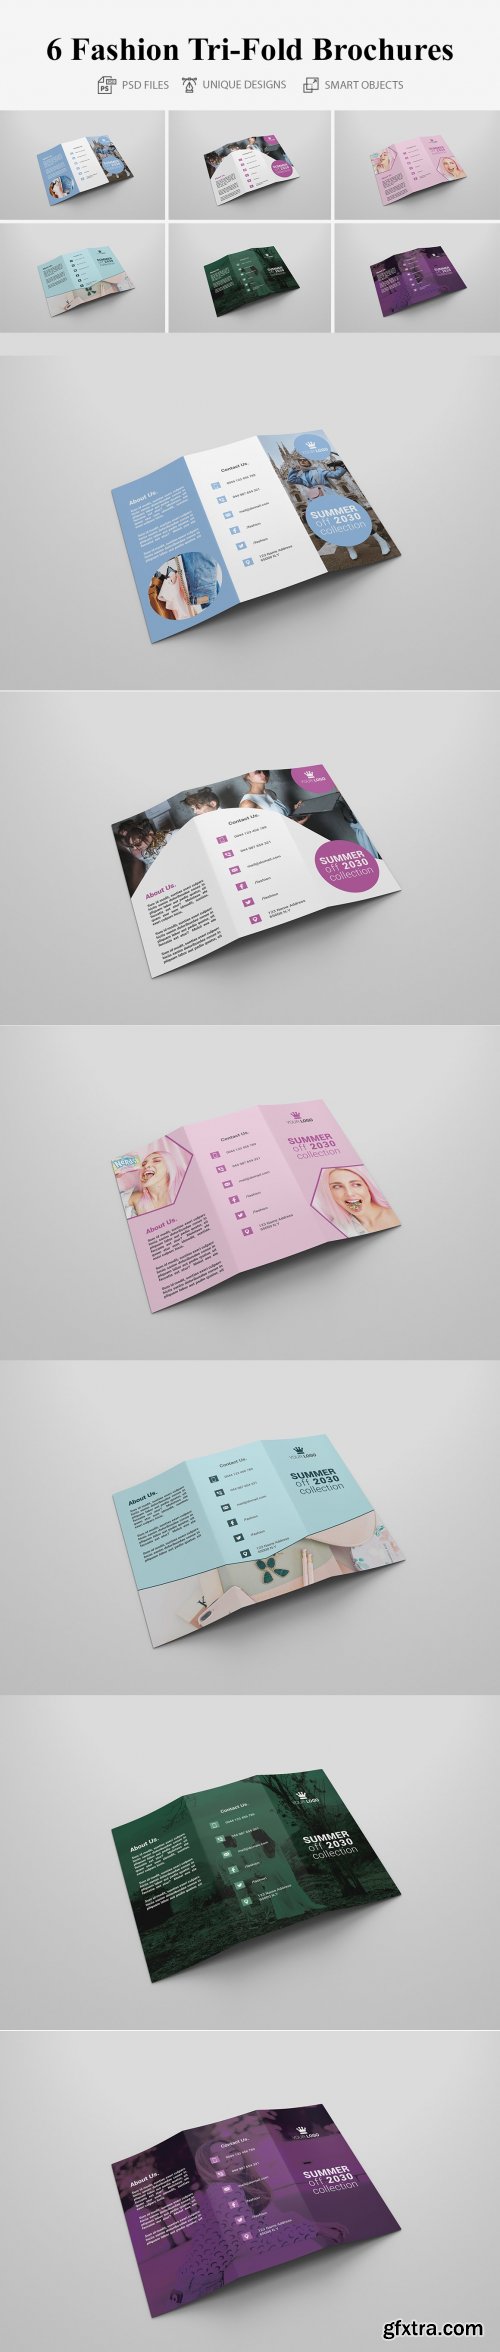 CreativeMarket - 6 Fashion Tri-fold Brochures 4160669